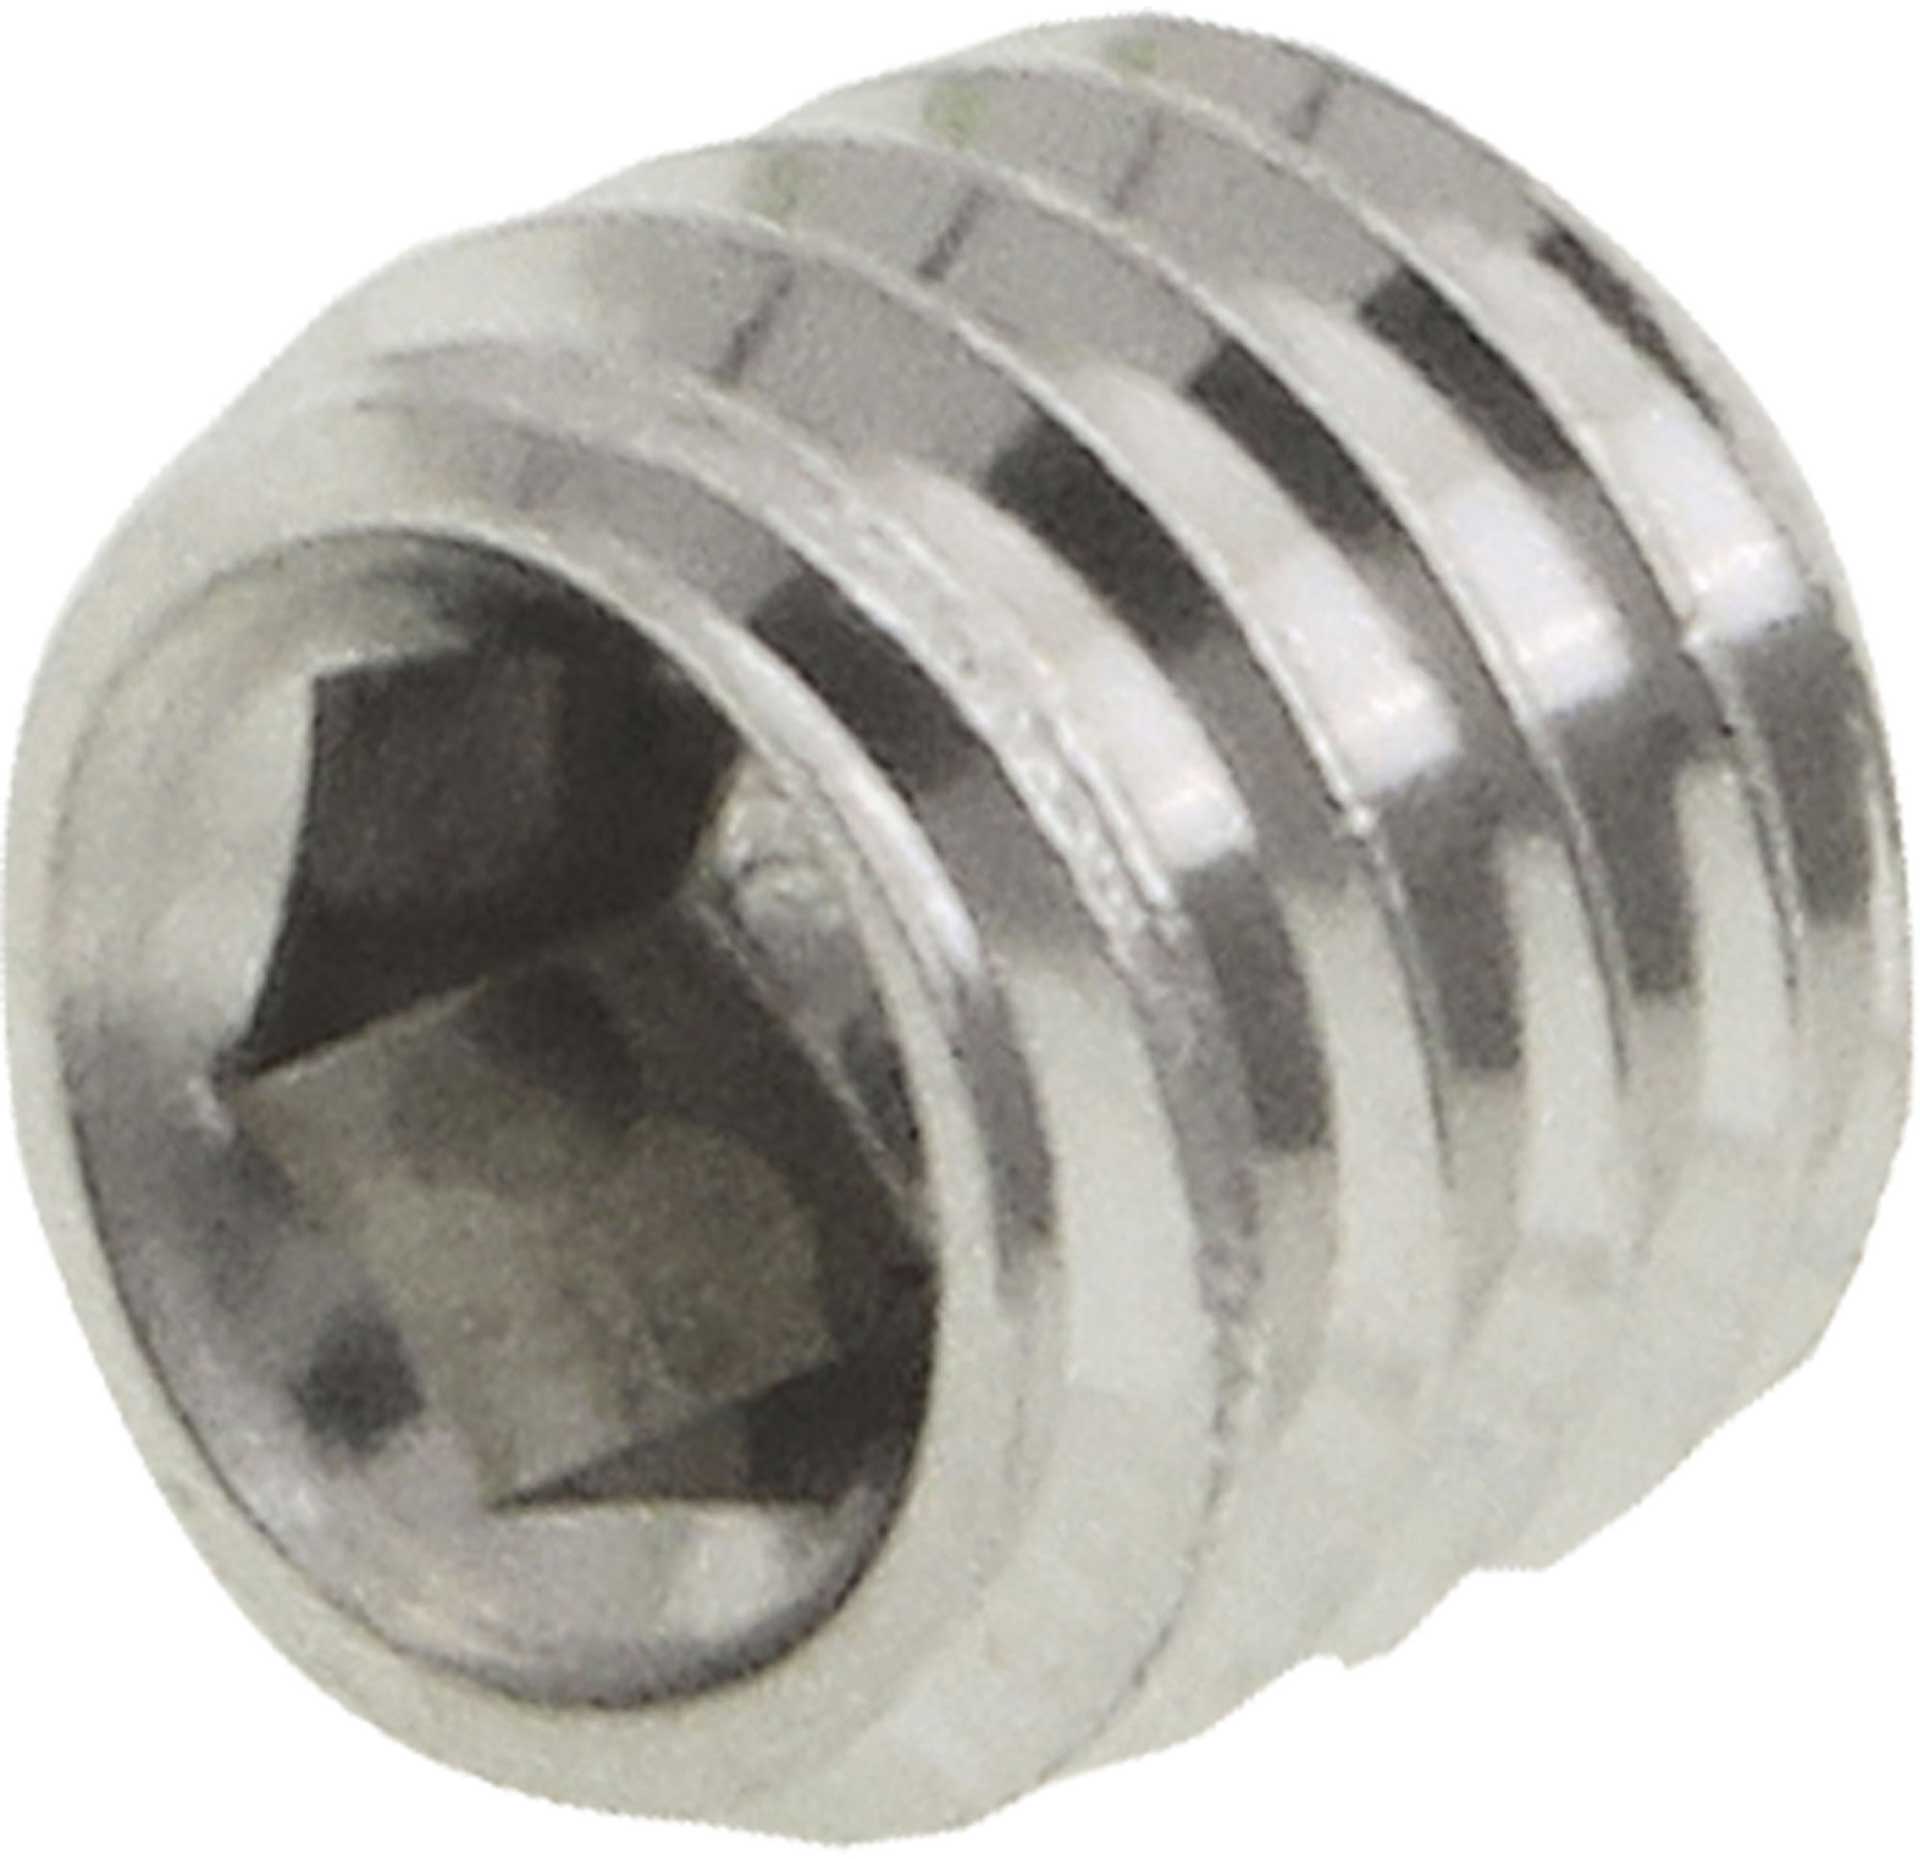 Modellbau Lindinger Grub screws / grub screws M4/4mm 10pcs. stainless steel